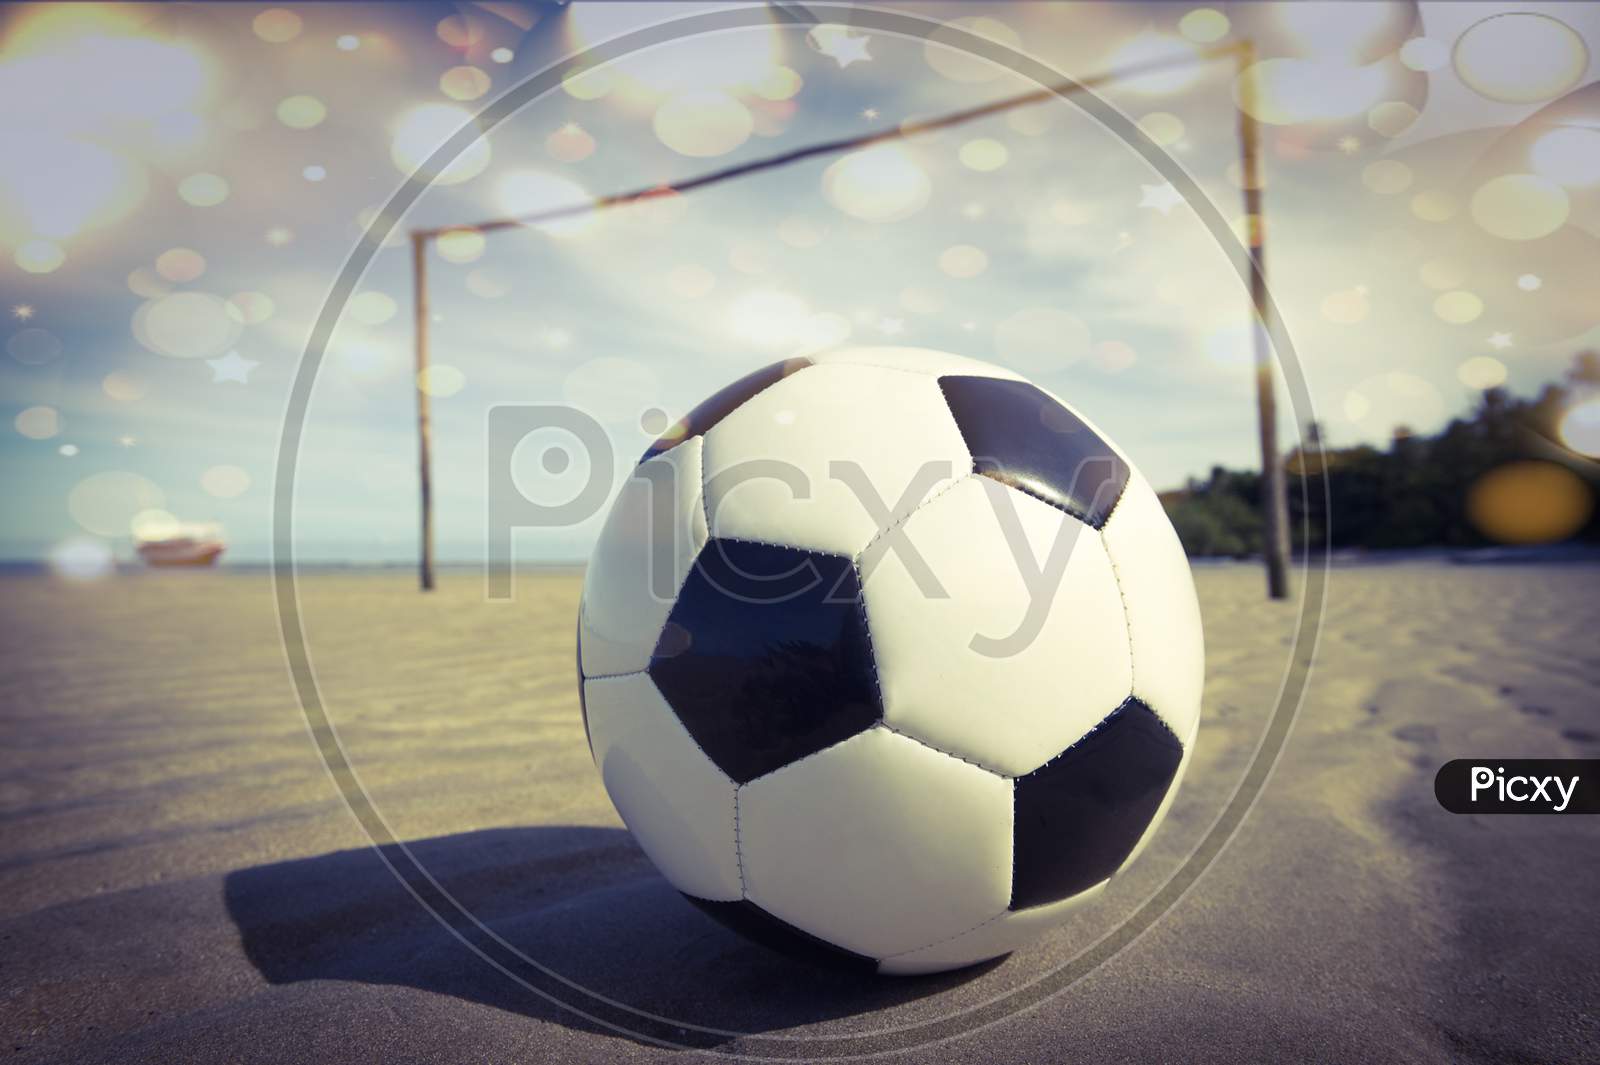 Football tournament, Soccer, cup, green field ,Design Background